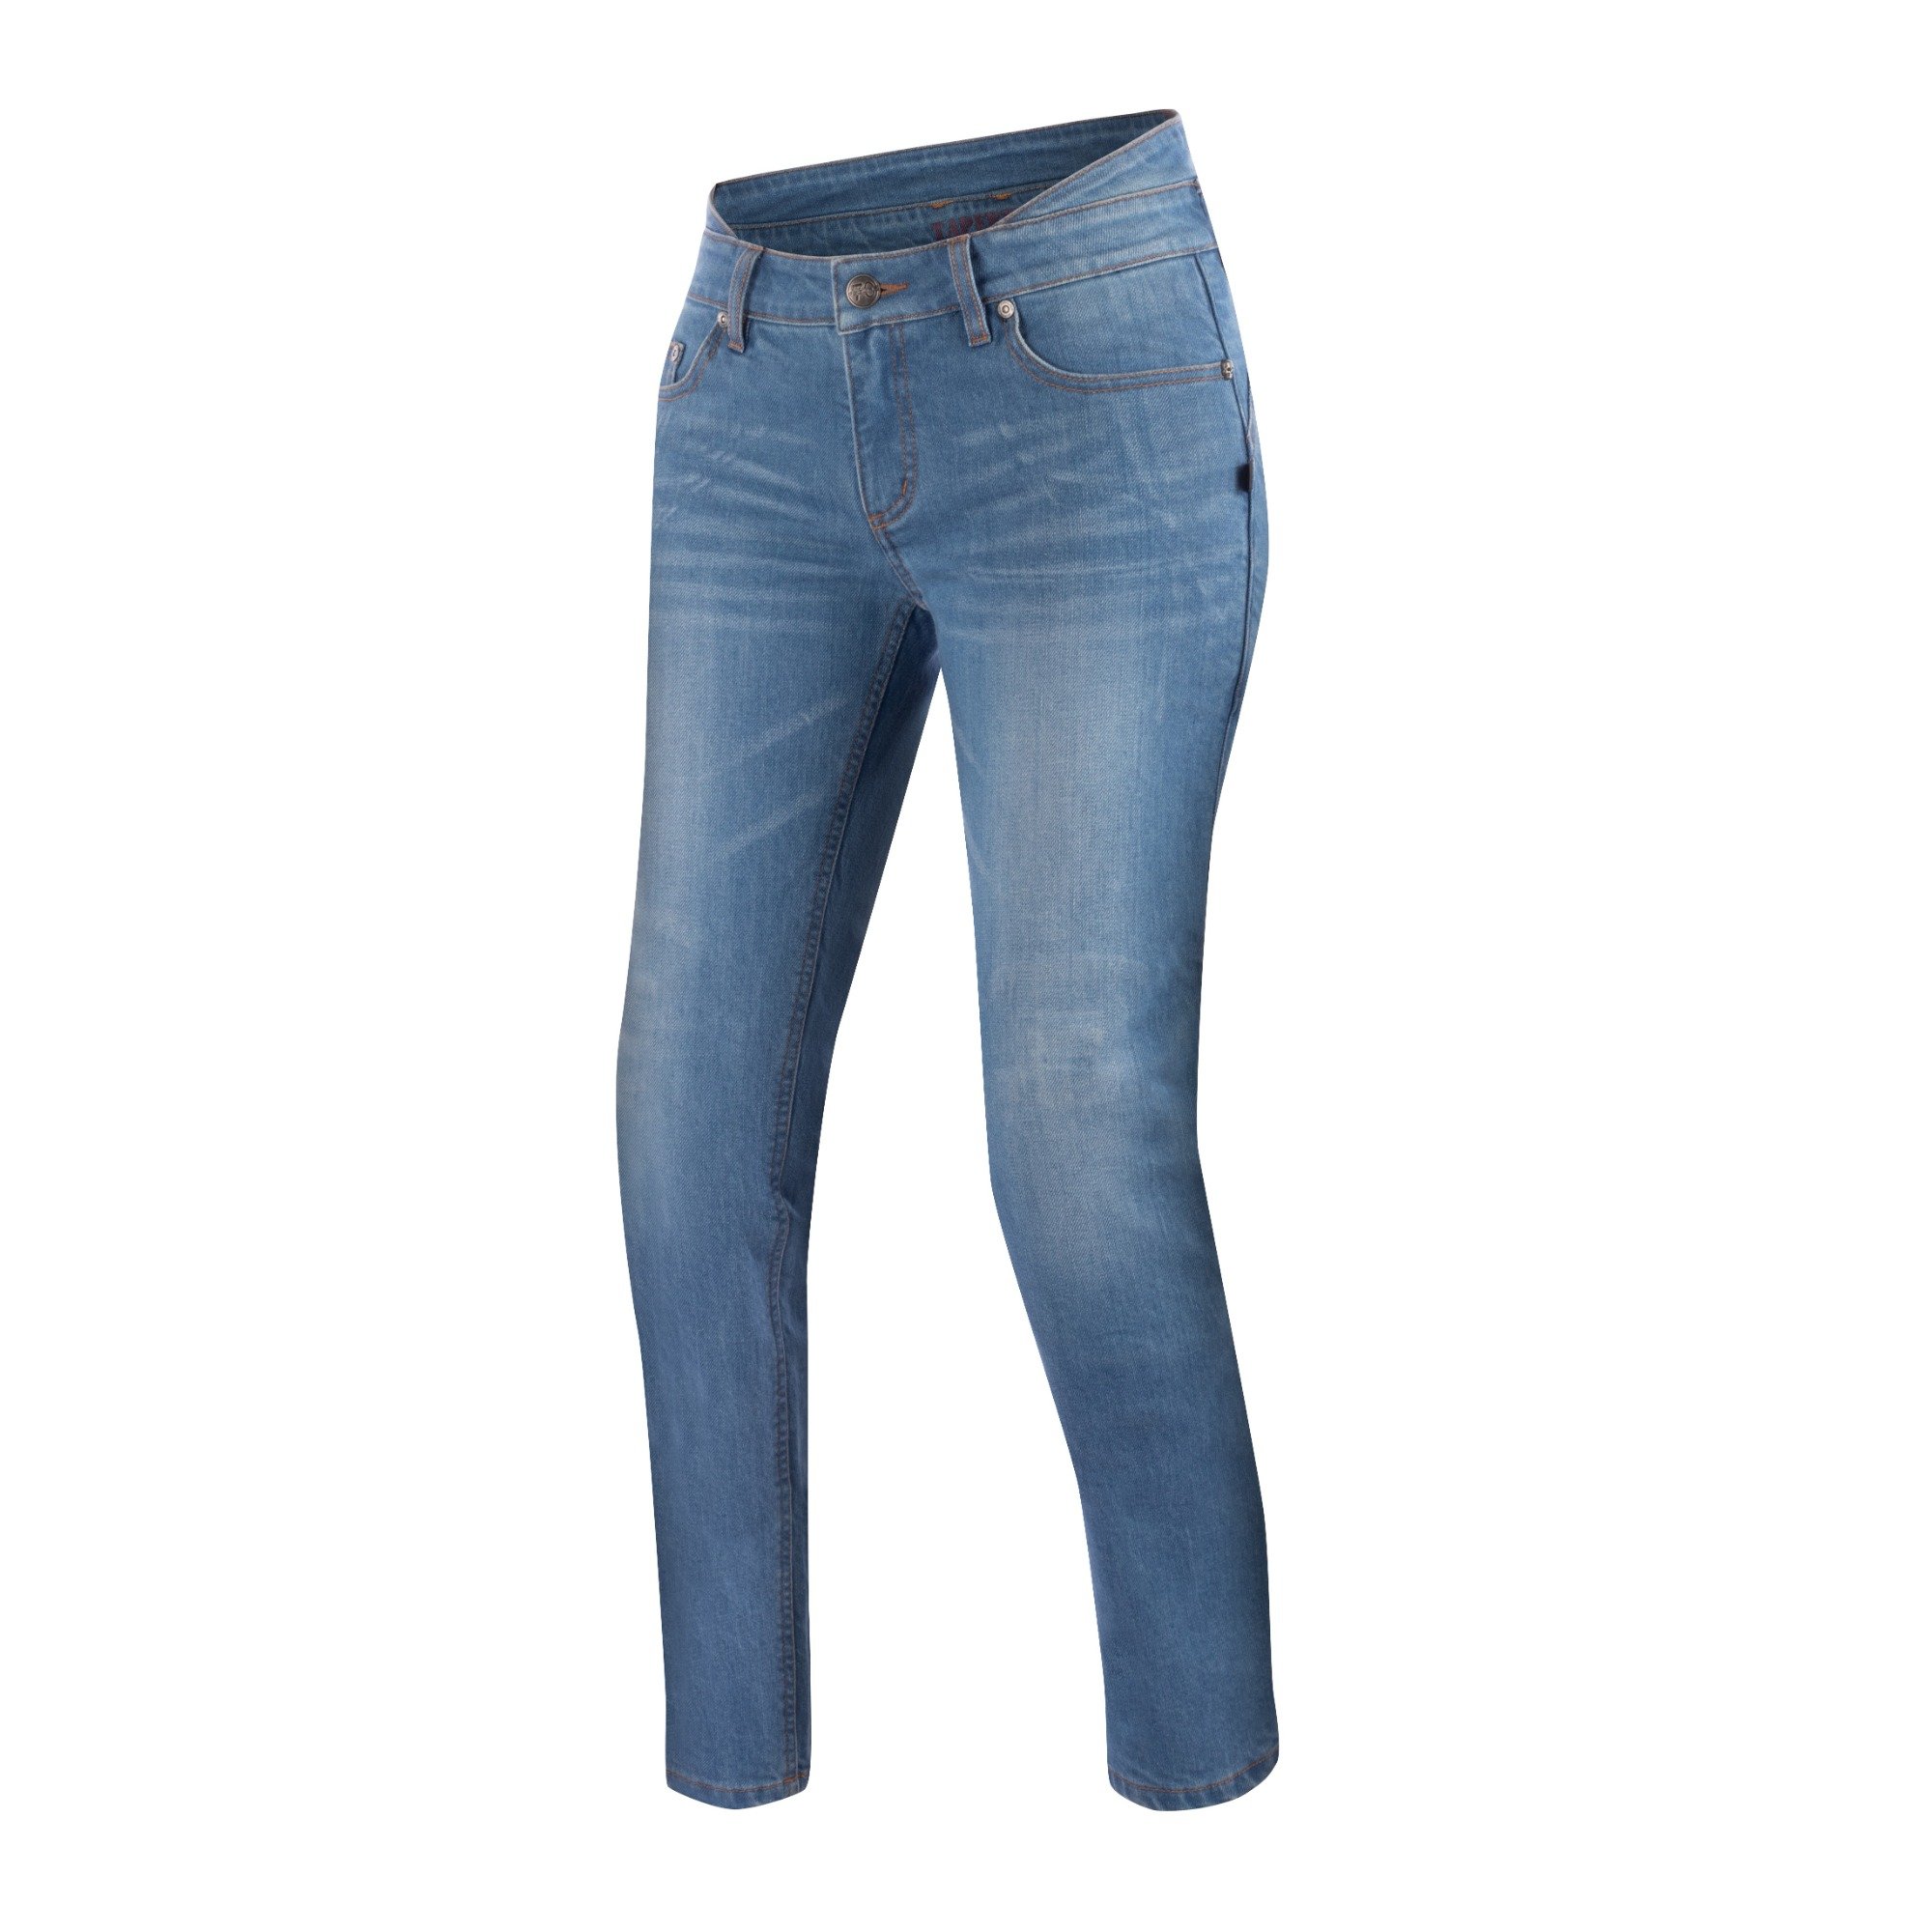 Image of Segura Trousers Lady Rosco Blue Size T3 ID 3660815168158